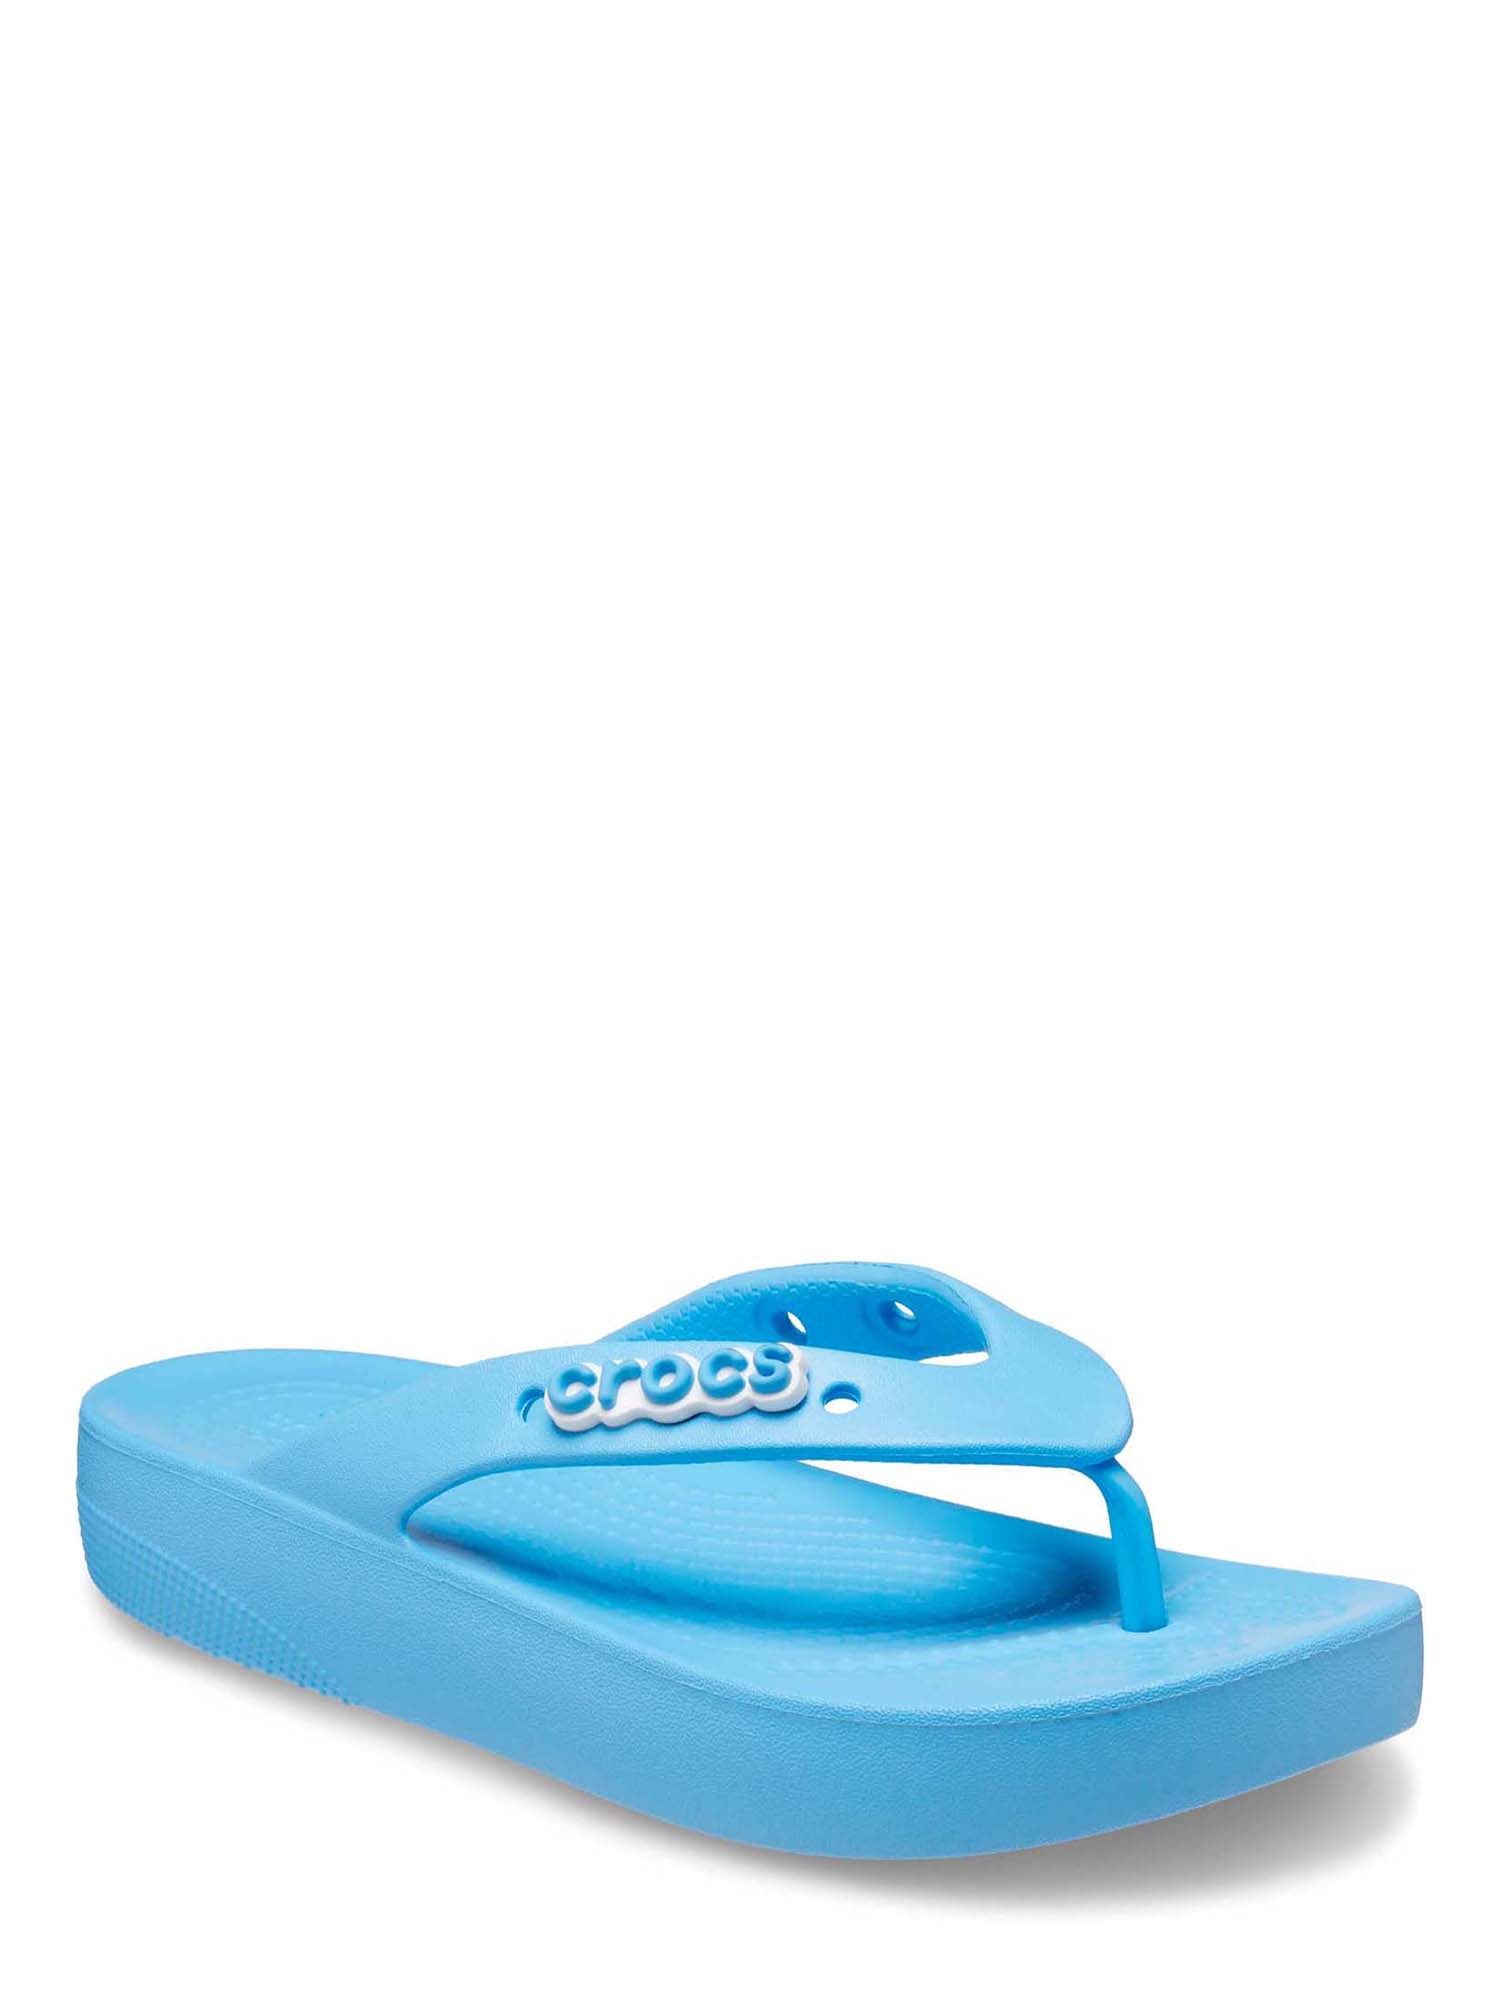 Crocs Women's Classic Platform Flip-flop Thong - Walmart.com